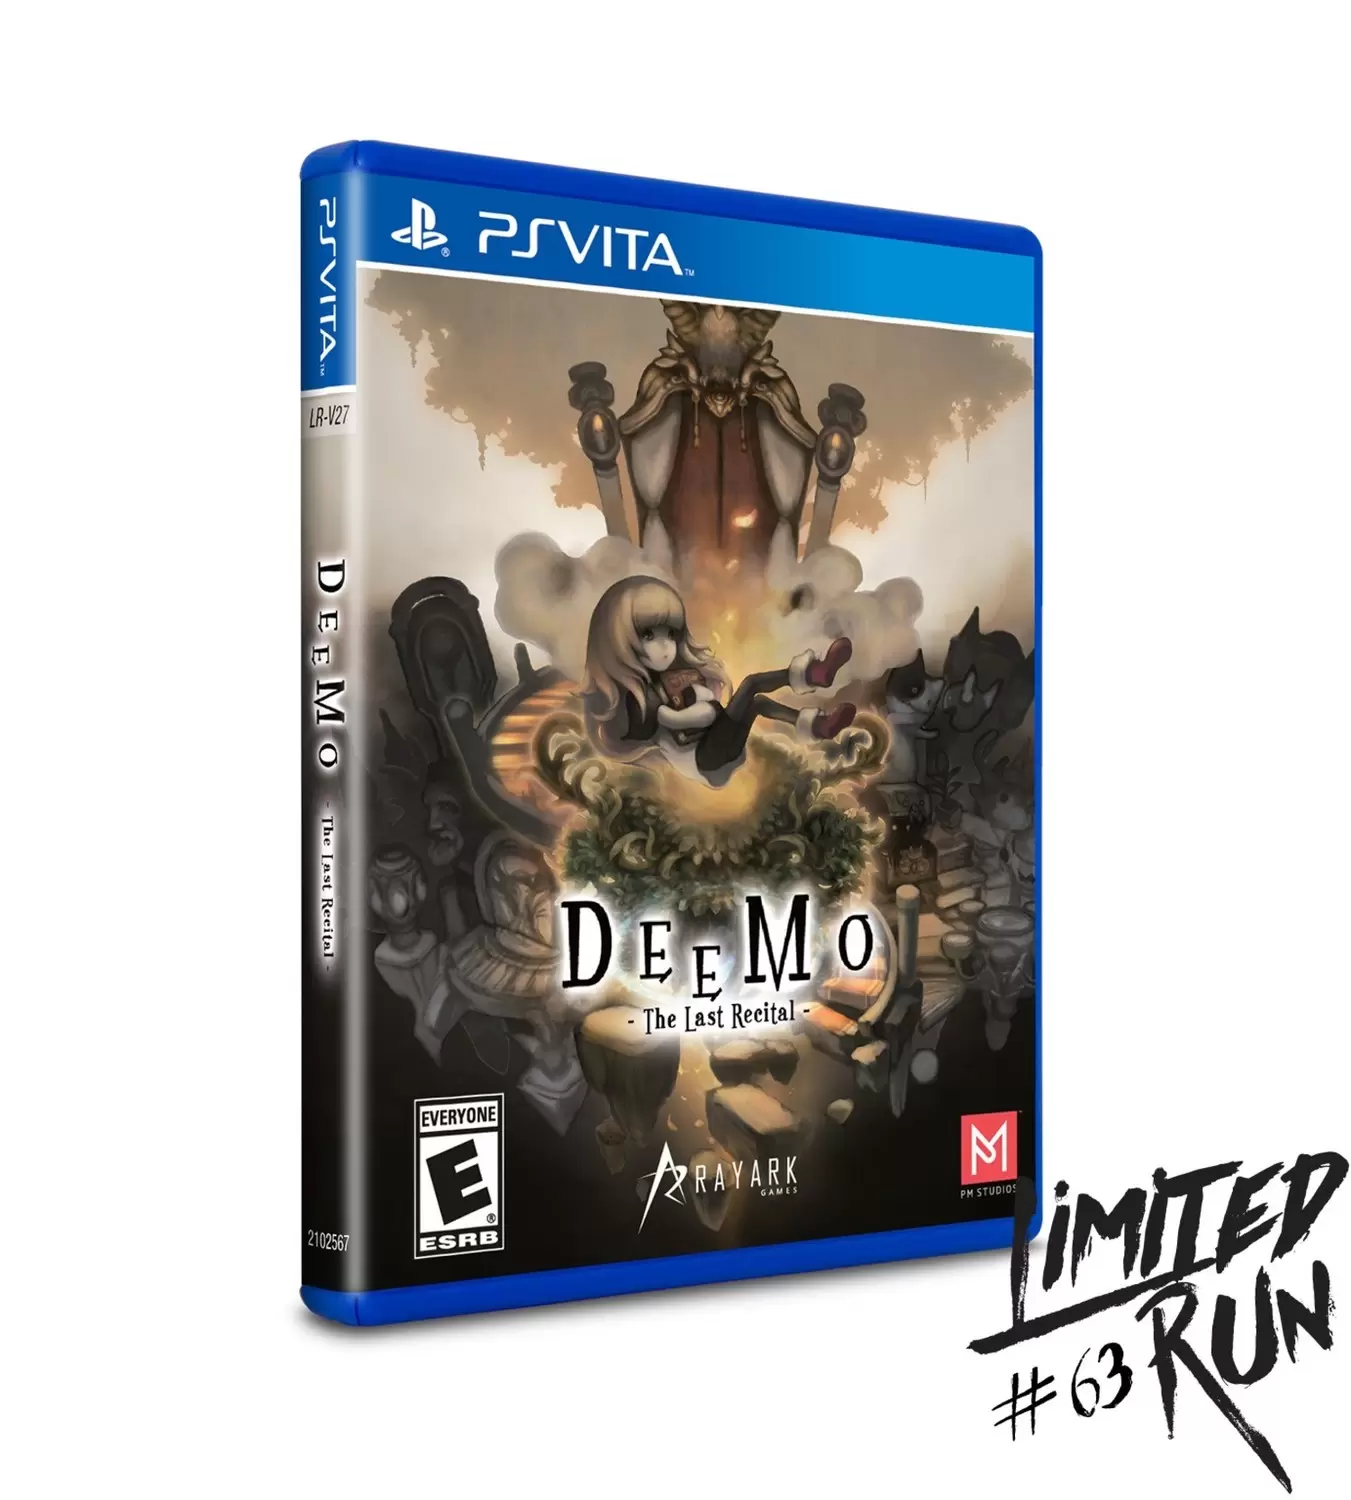 PS Vita Games - Deemo